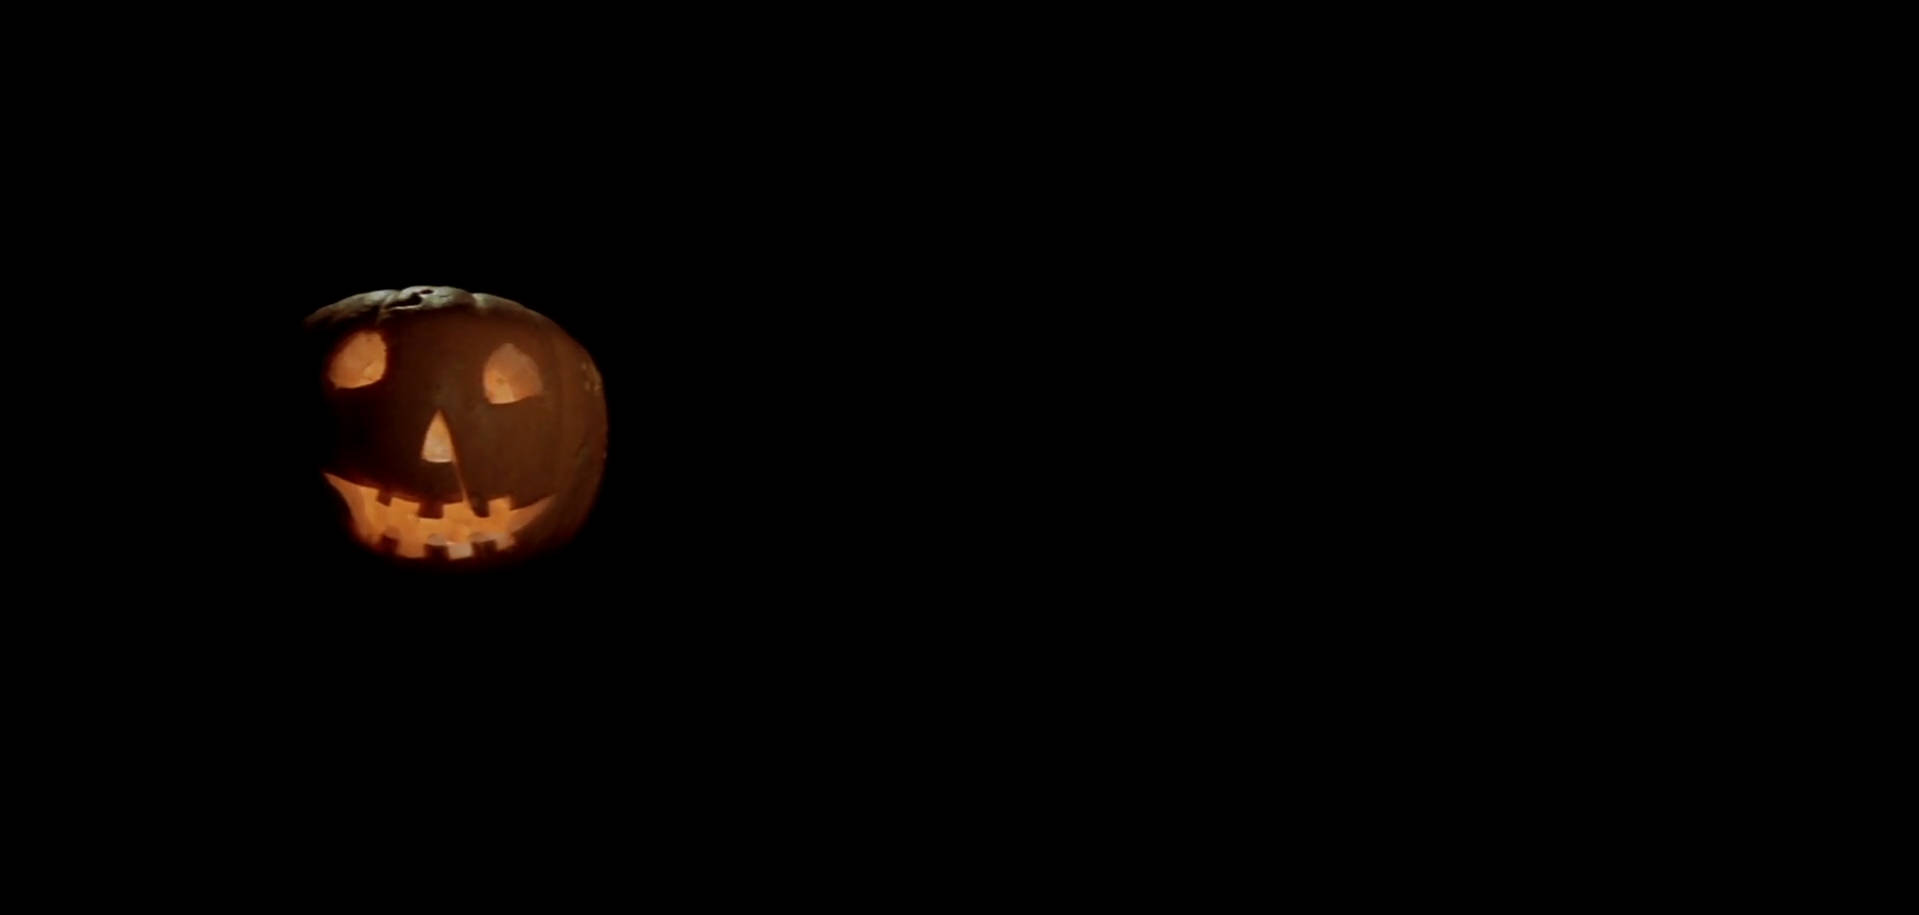 “Enjoy the Halloween festive season with this spooky jack o'lantern” Wallpaper